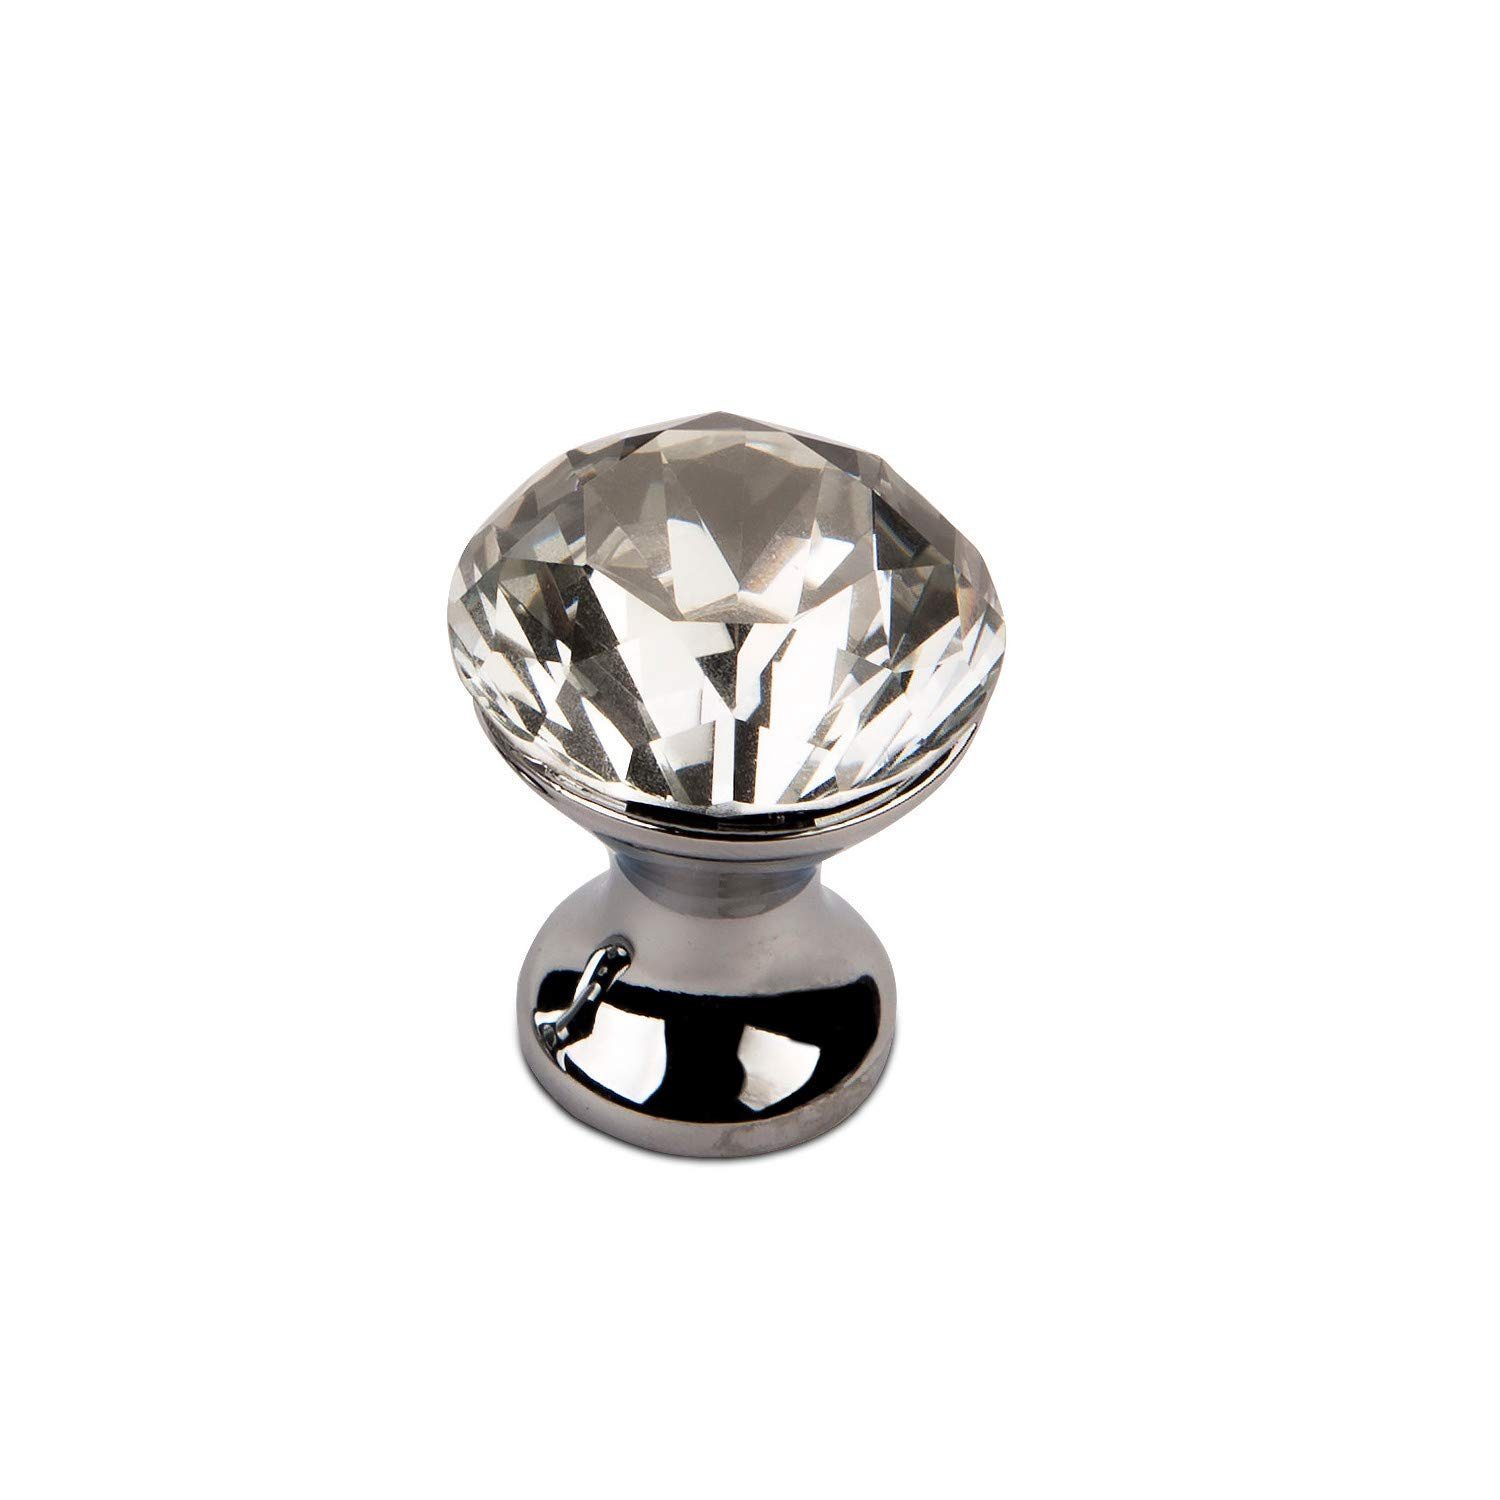 Crystal-Line dekorativ Kristallglas, Schraube incl. Möbelknopf Chrom glamour Knopf / SO-TECH® Knauf